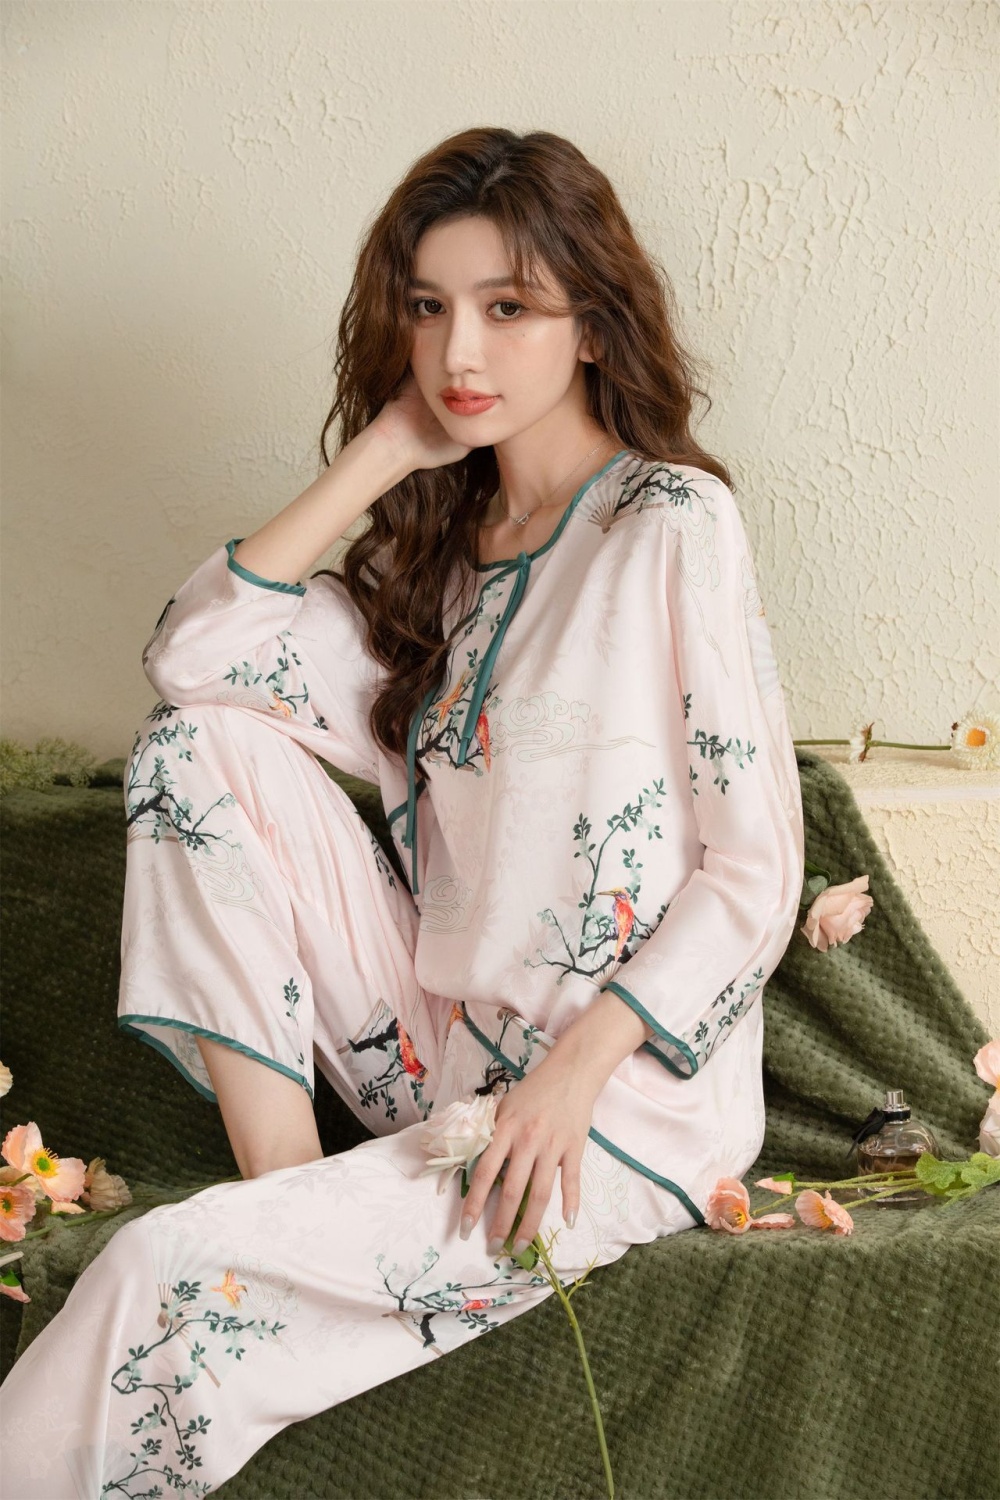 Ice silk long sleeve long pants spring homewear pajamas for women